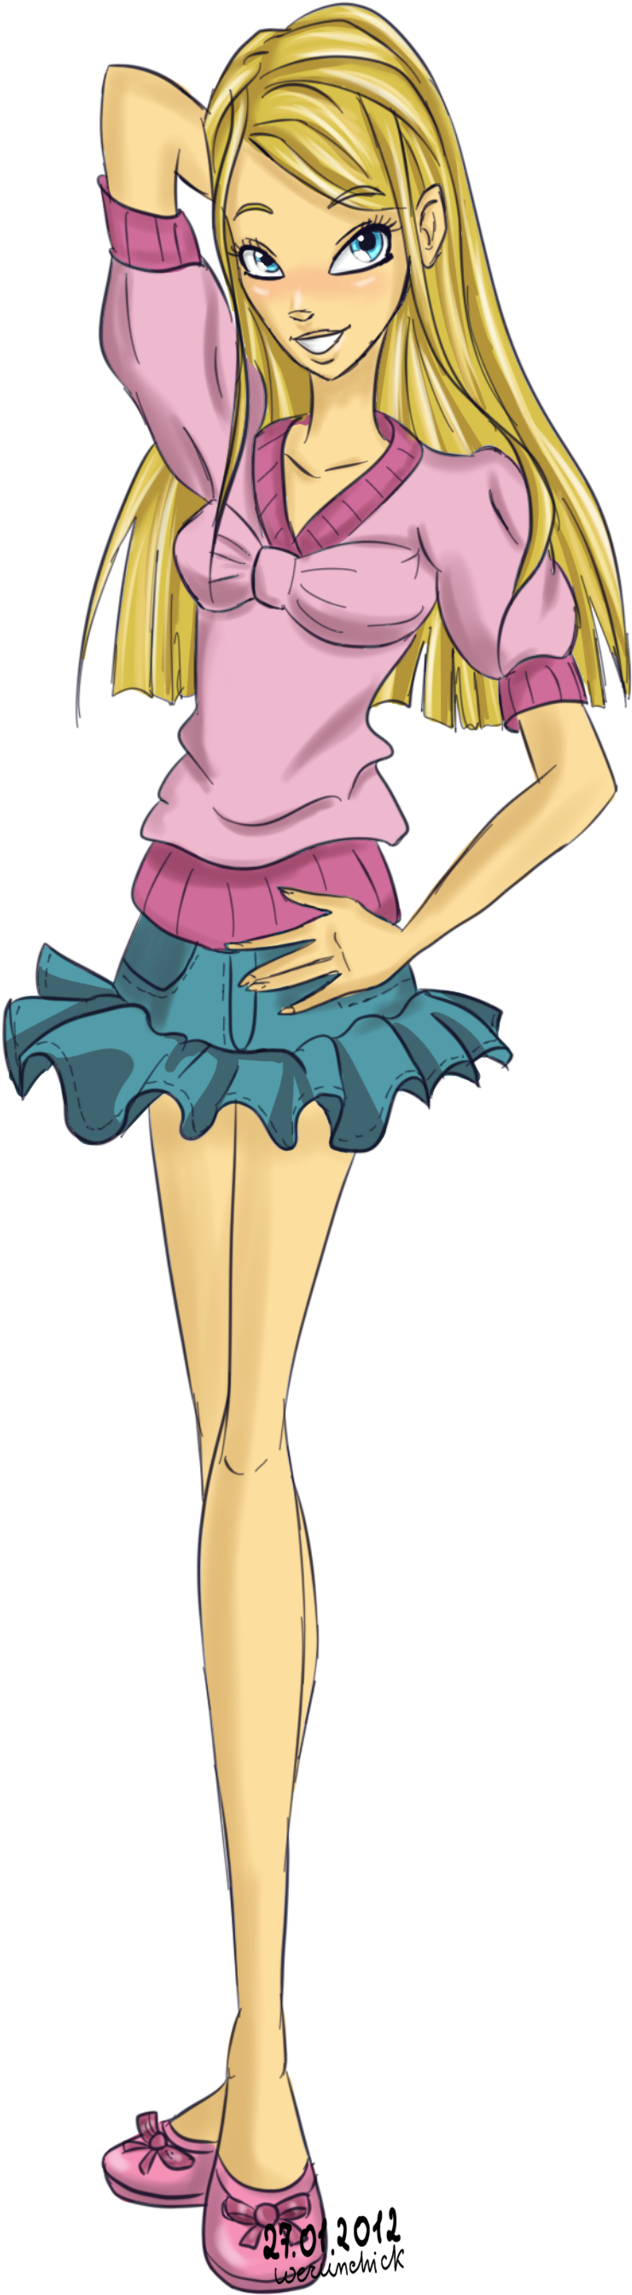 Fairy Mangaka Pin-up Girl Cartoon - Illustration (1024x2457)